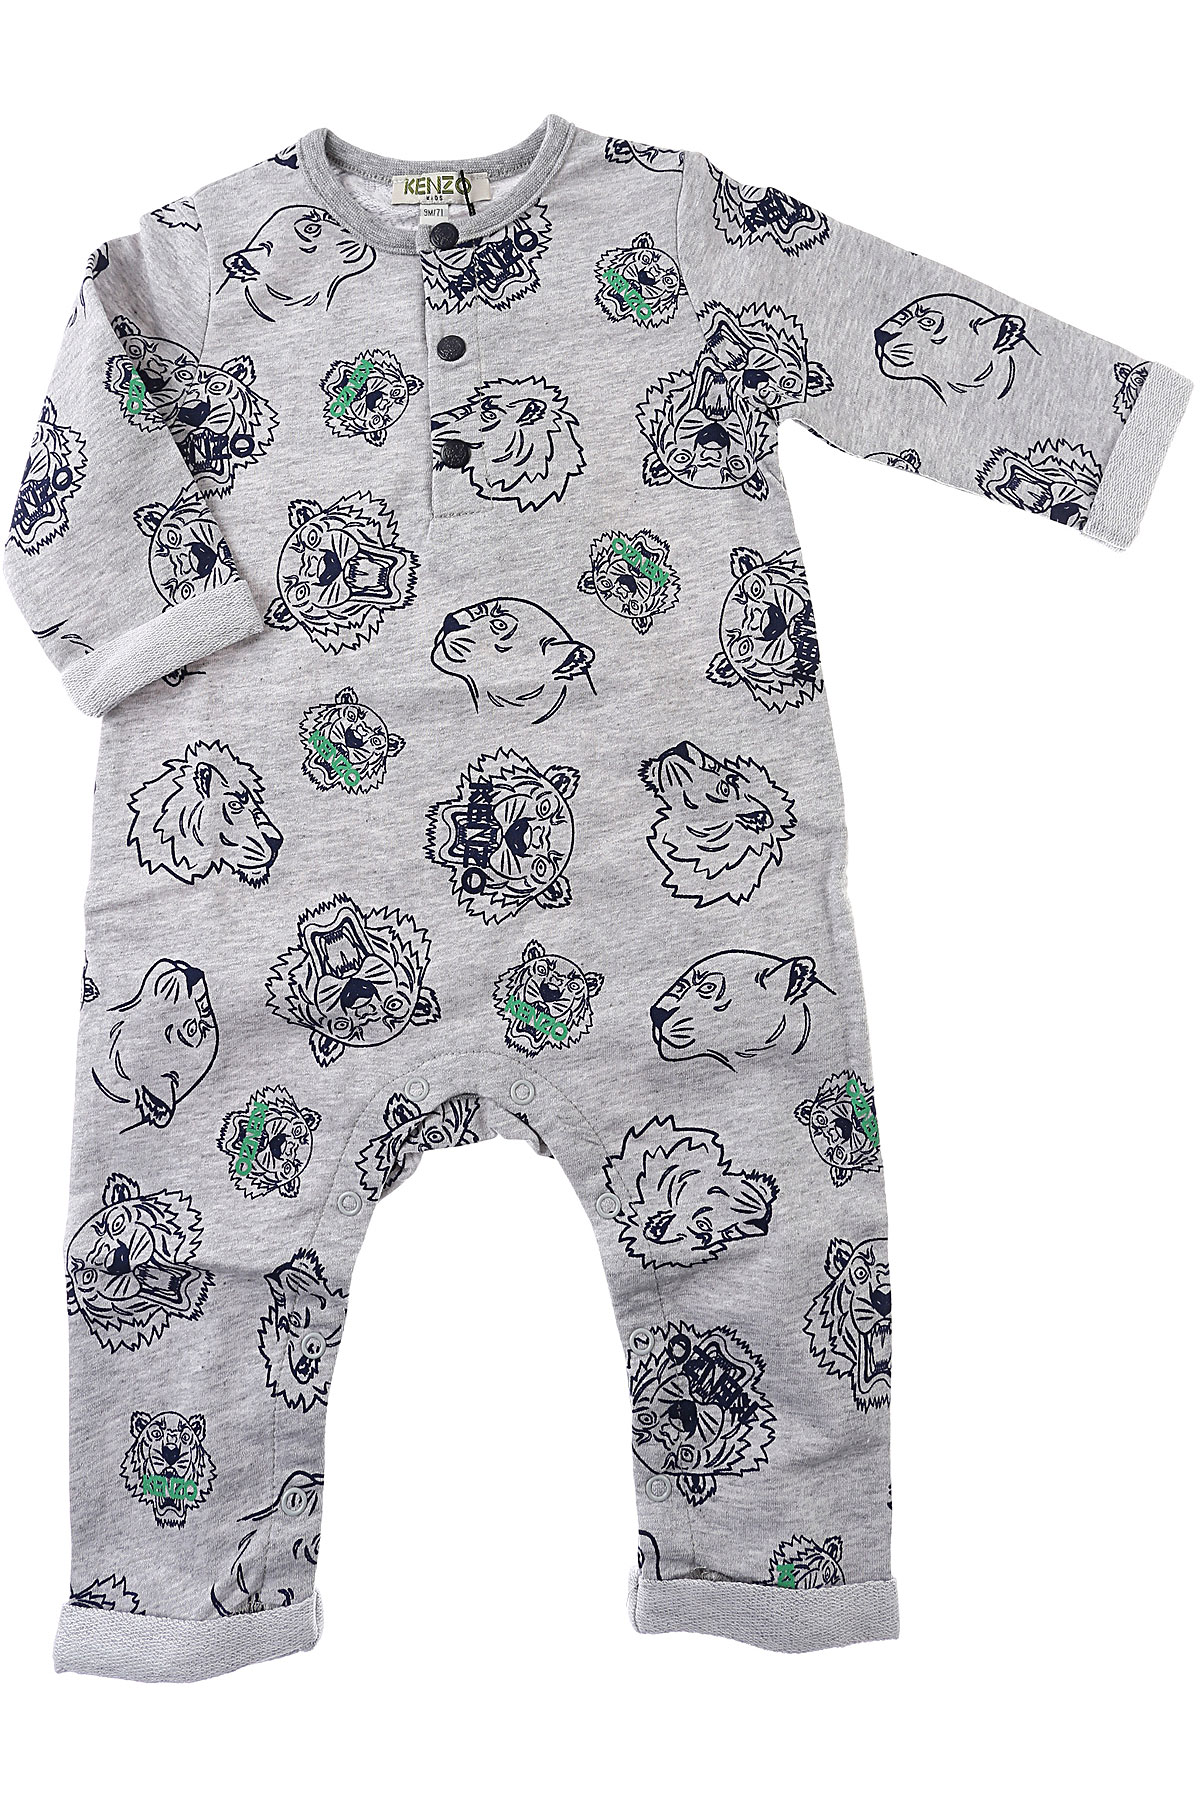 Baby Boy Clothing Kenzo, Style code: kl32517-22-